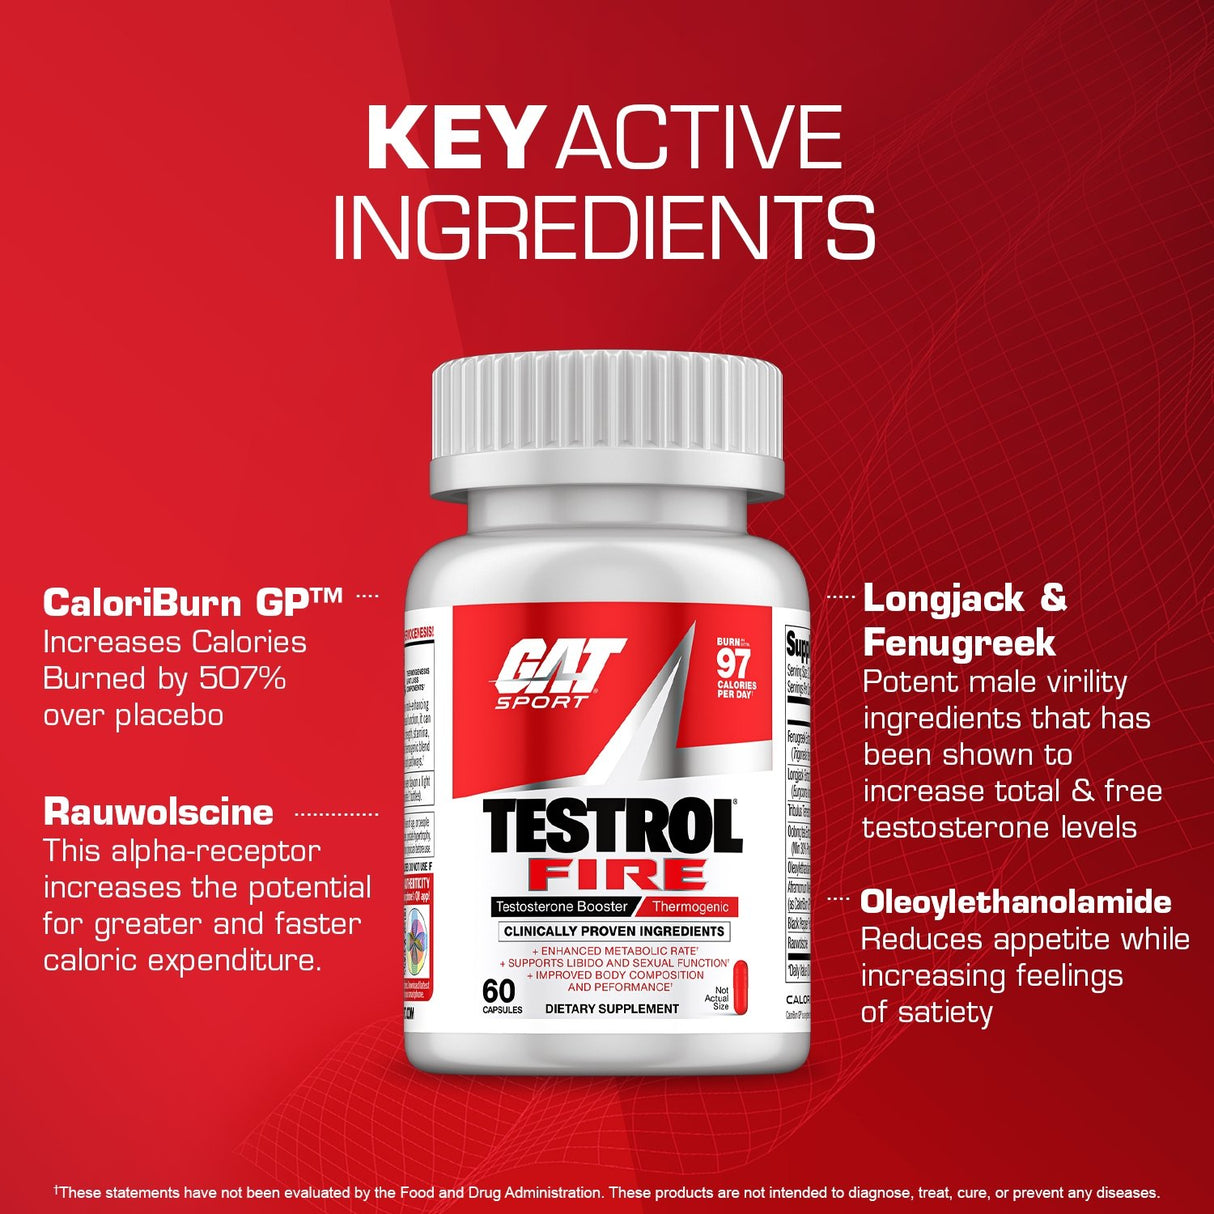 GAT SPORT Testrol Fire - key active ingredients